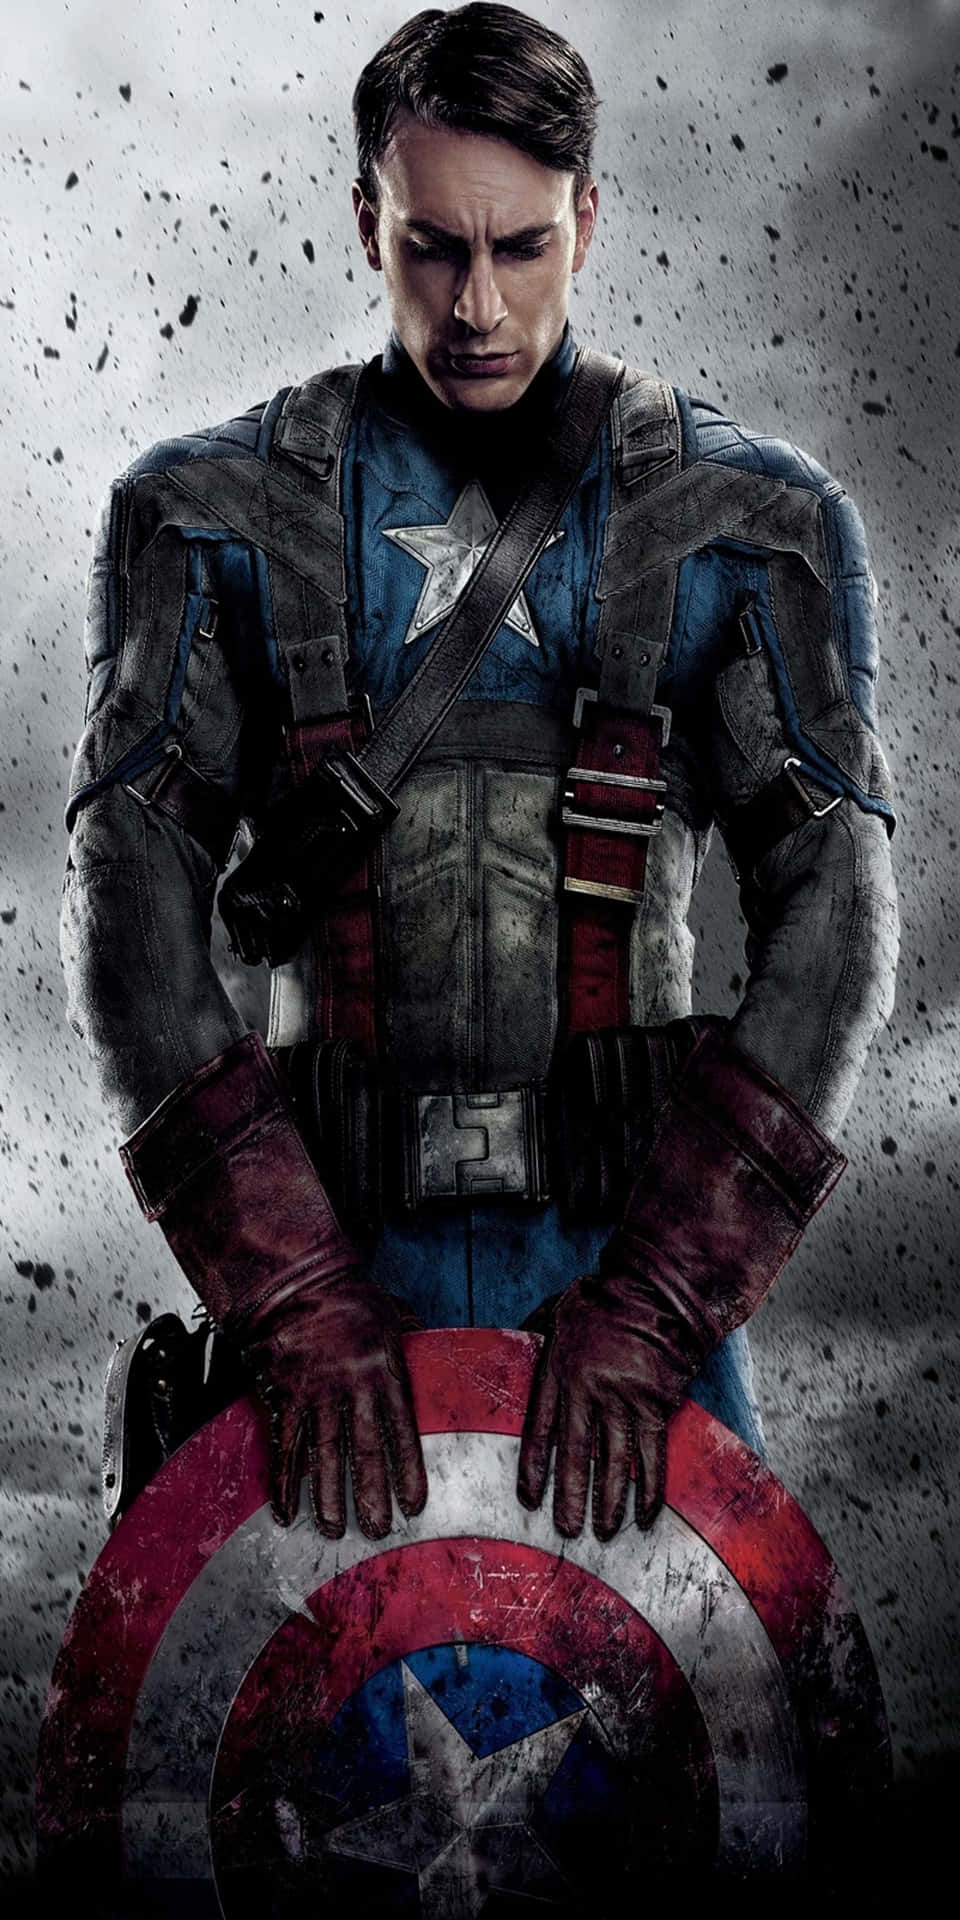 Pixel3 Hintergrundbild Von Captain America Aus Dem Marvel Cinematic Universe